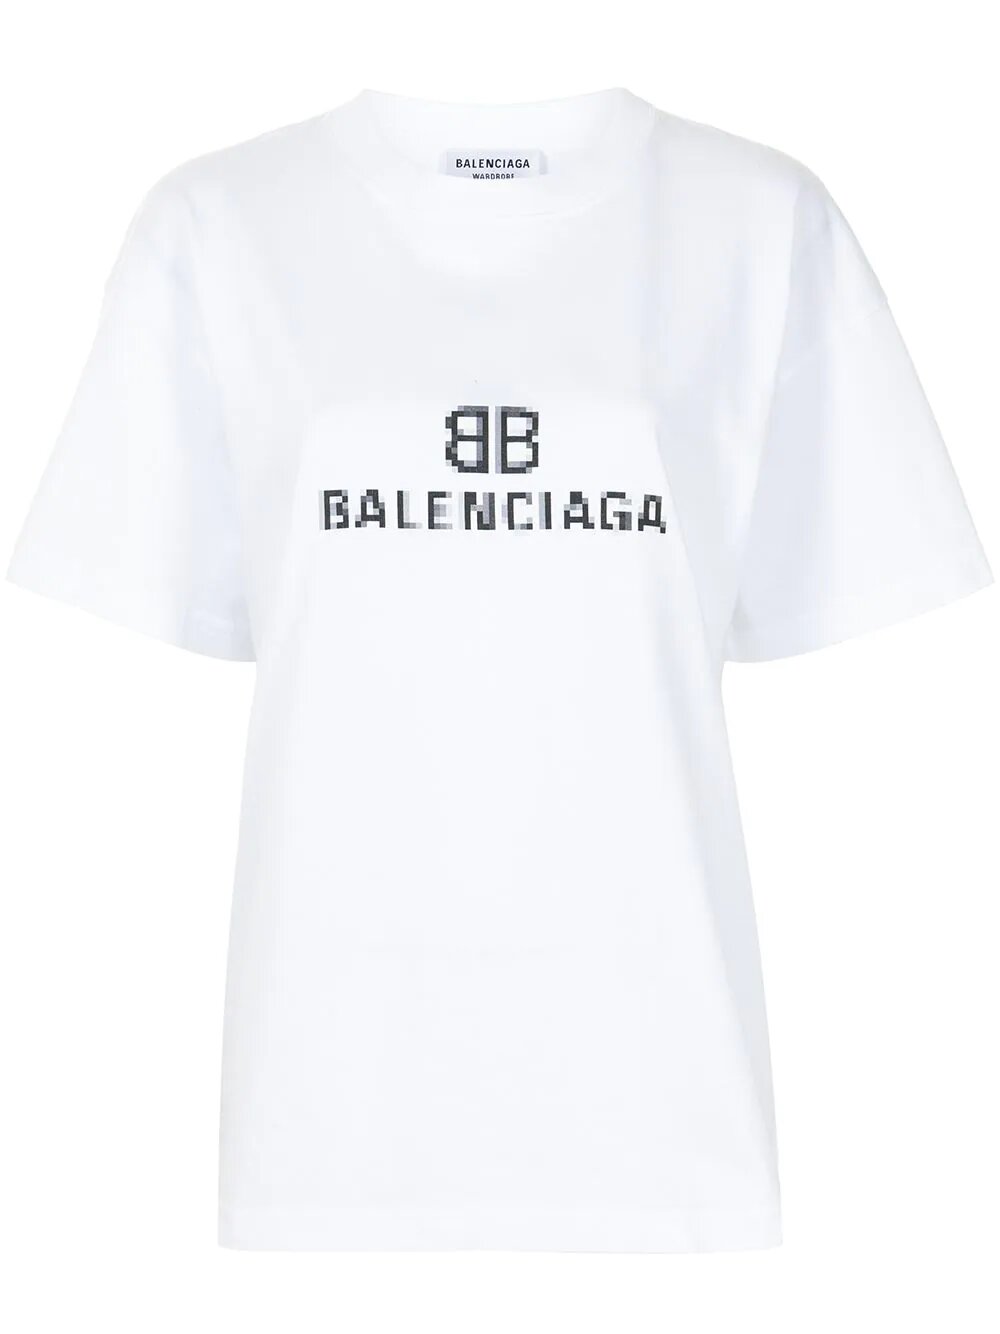 Balenciaga Overwear  TShirt Small Fit Small Logo in white 826591